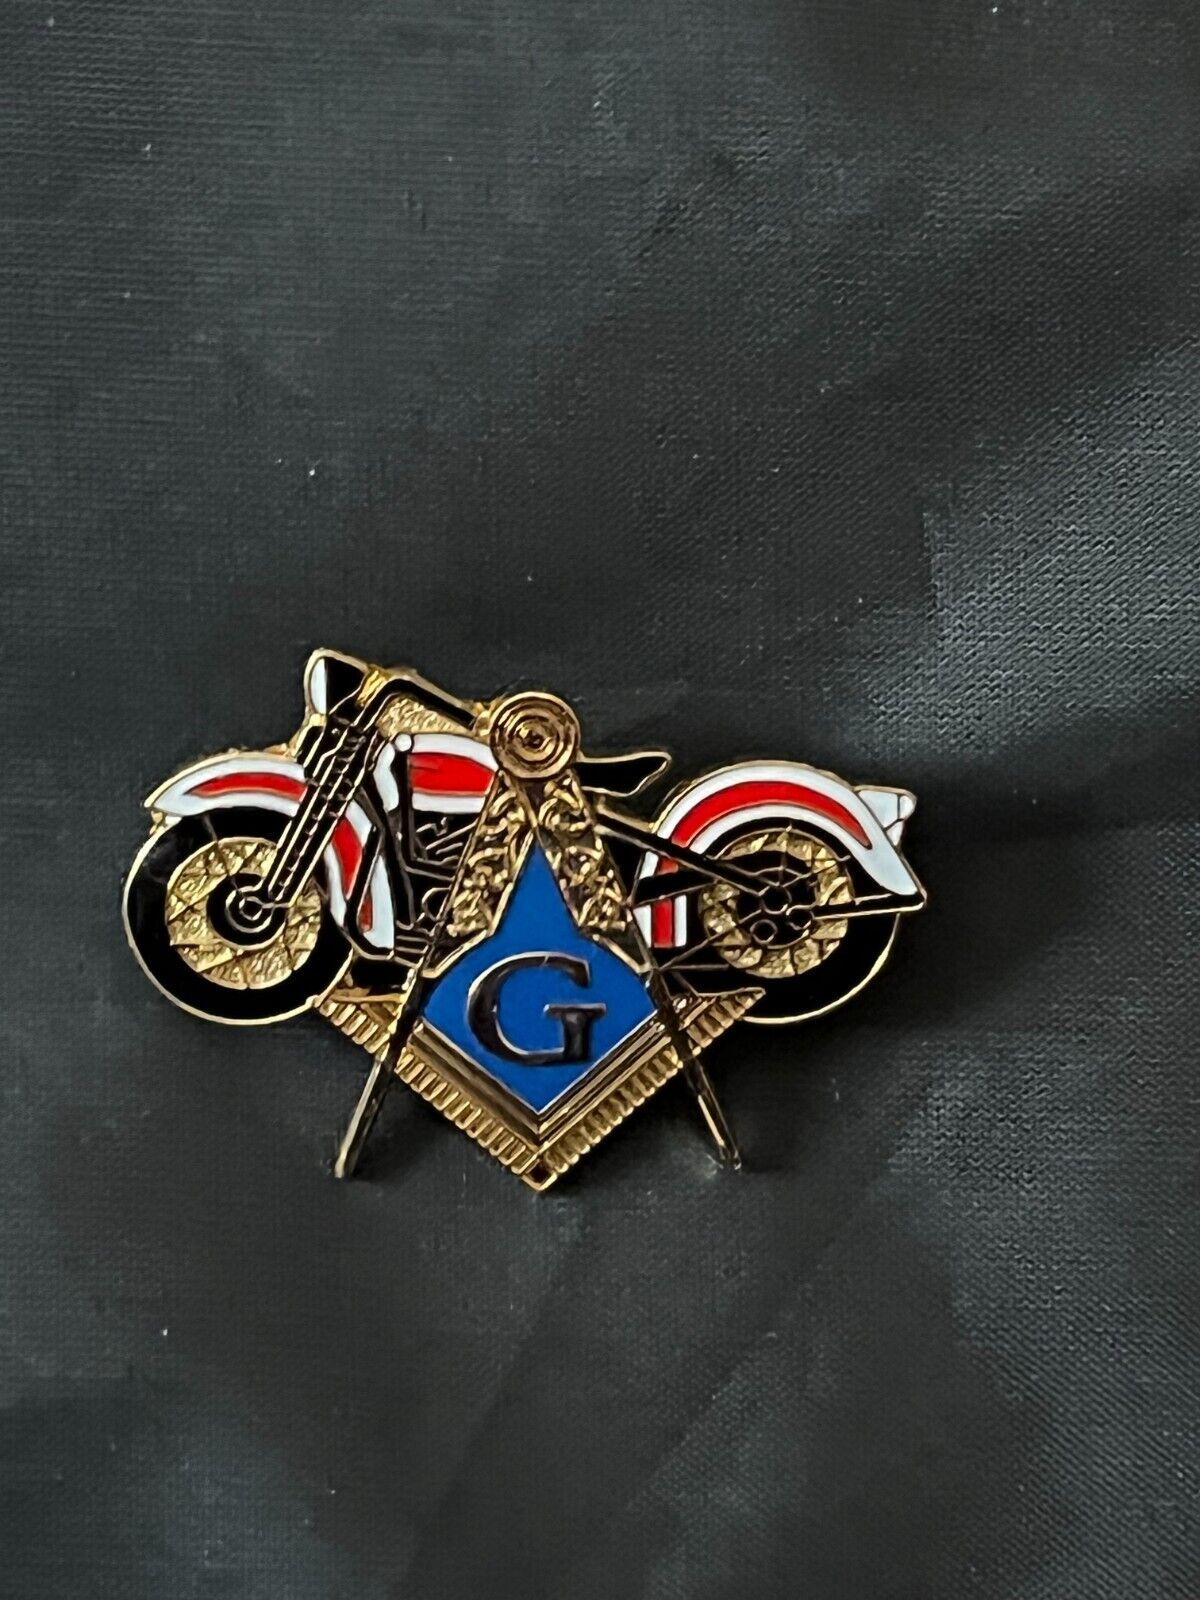 Square Compass Lapel Tac Pin Motorcycle Masonic Freemason Fraternity NEW